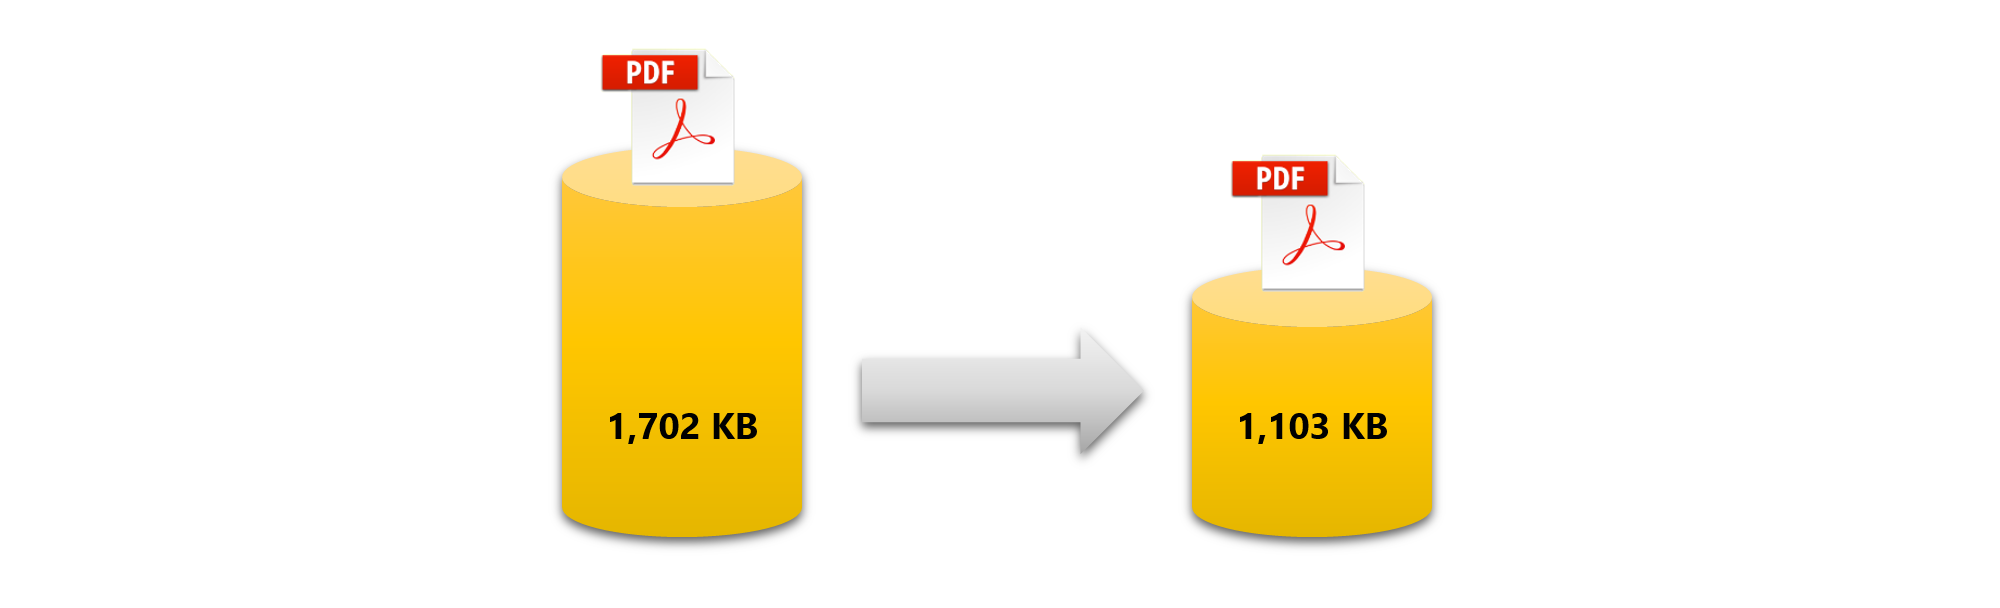 Resize PDF File Size